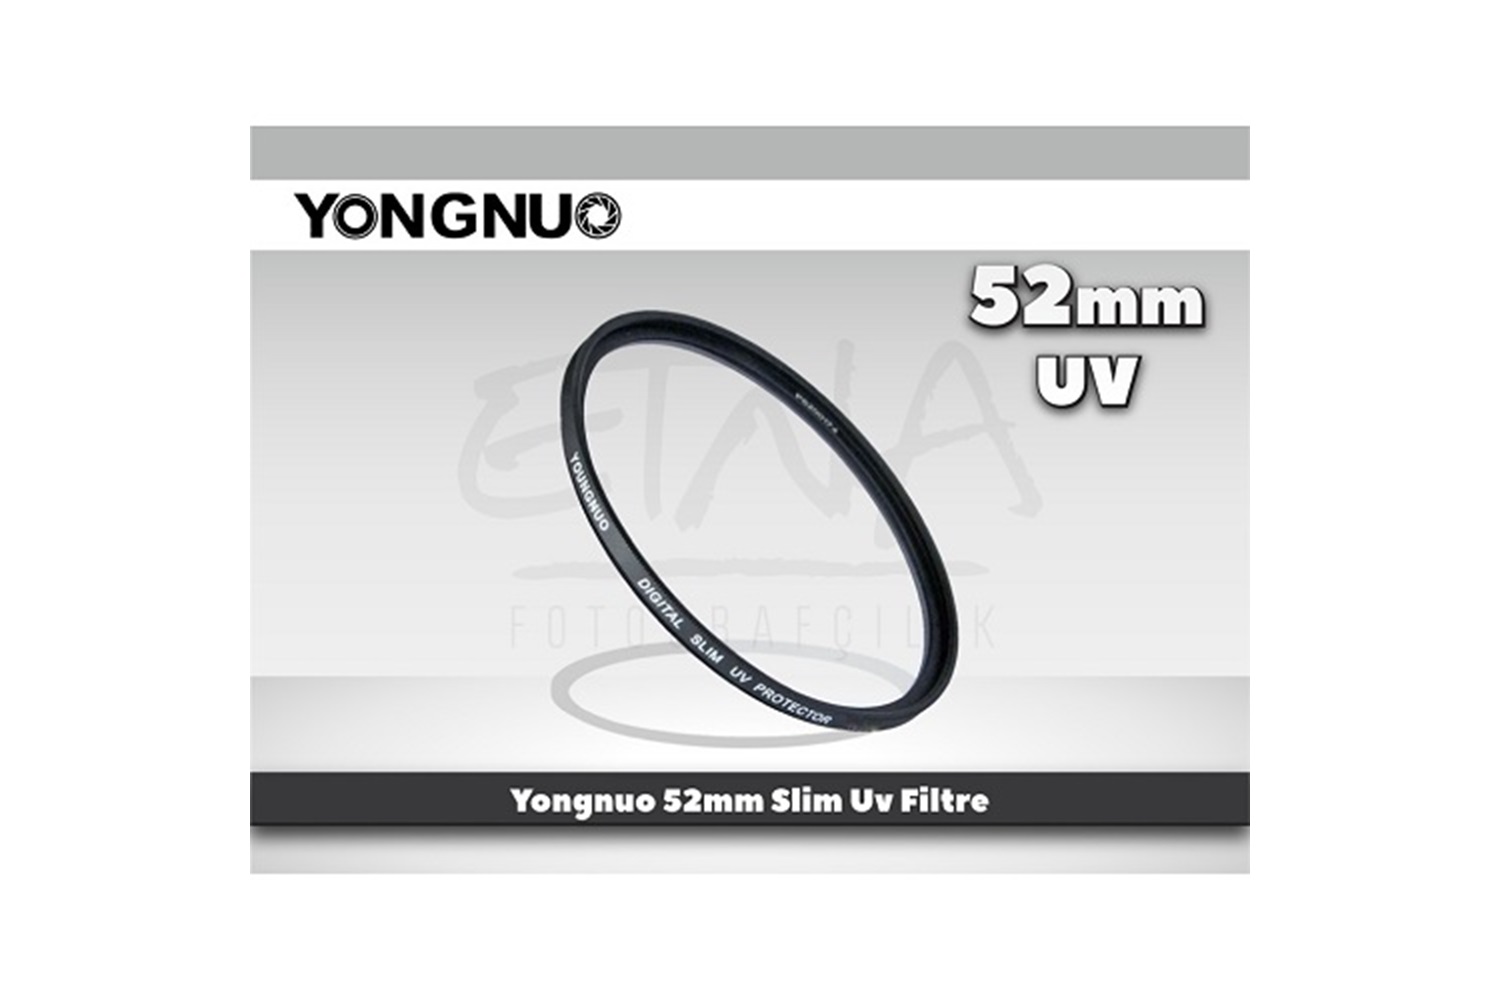 Yongnuo 52mm Slim Uv Filtre